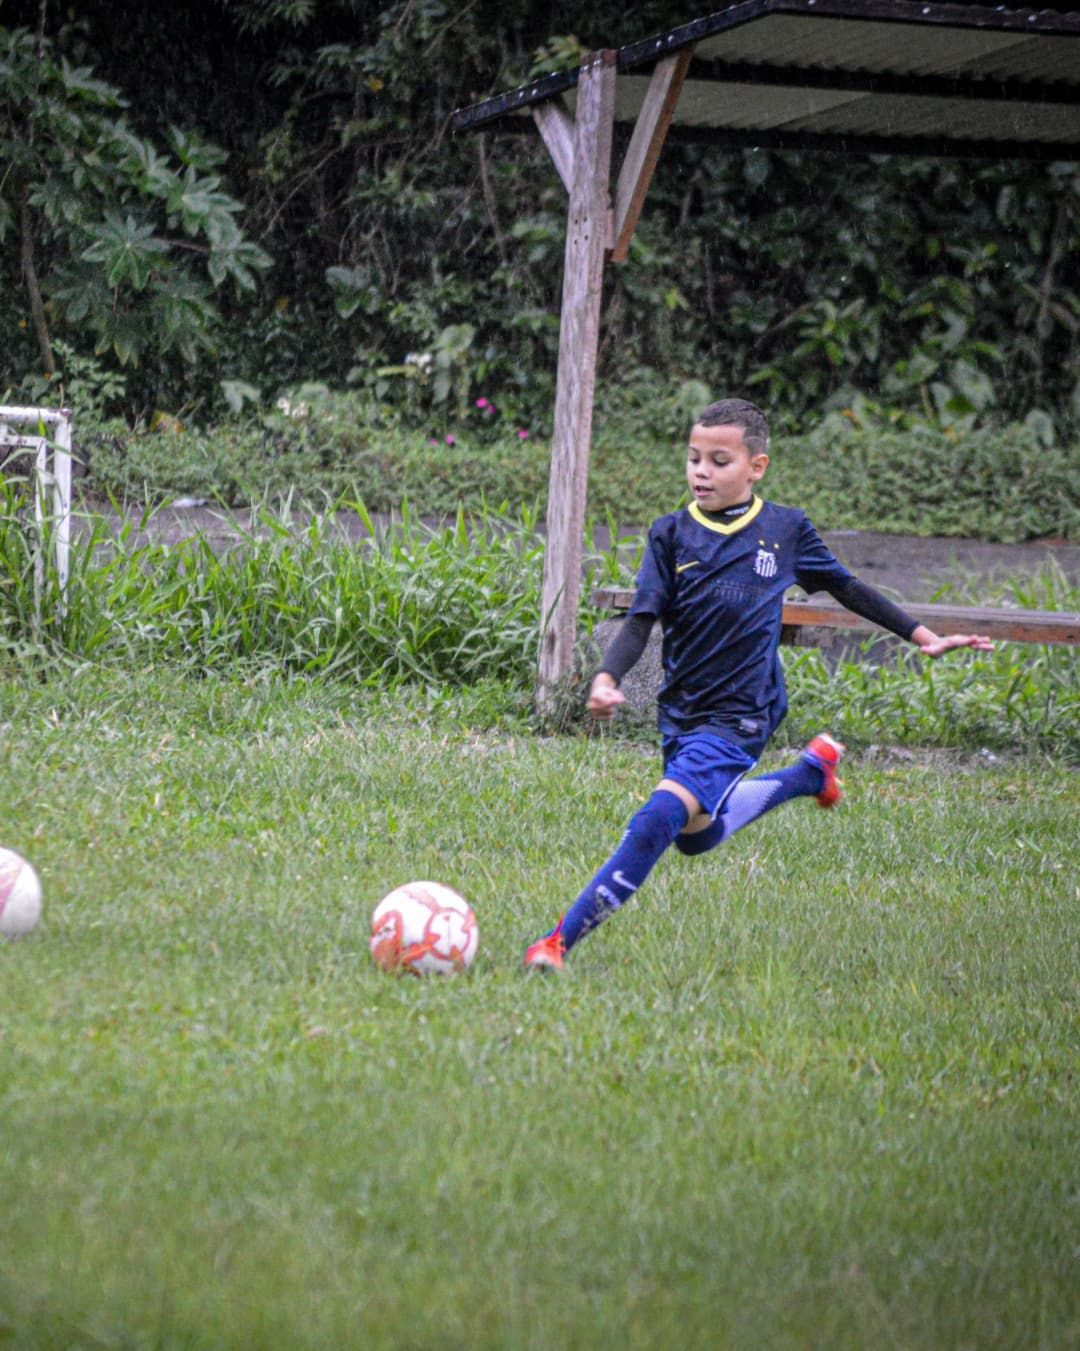 Hostilizado por torcedores do Santos, menino de 9 anos se desculpa por pegar camisa do rival